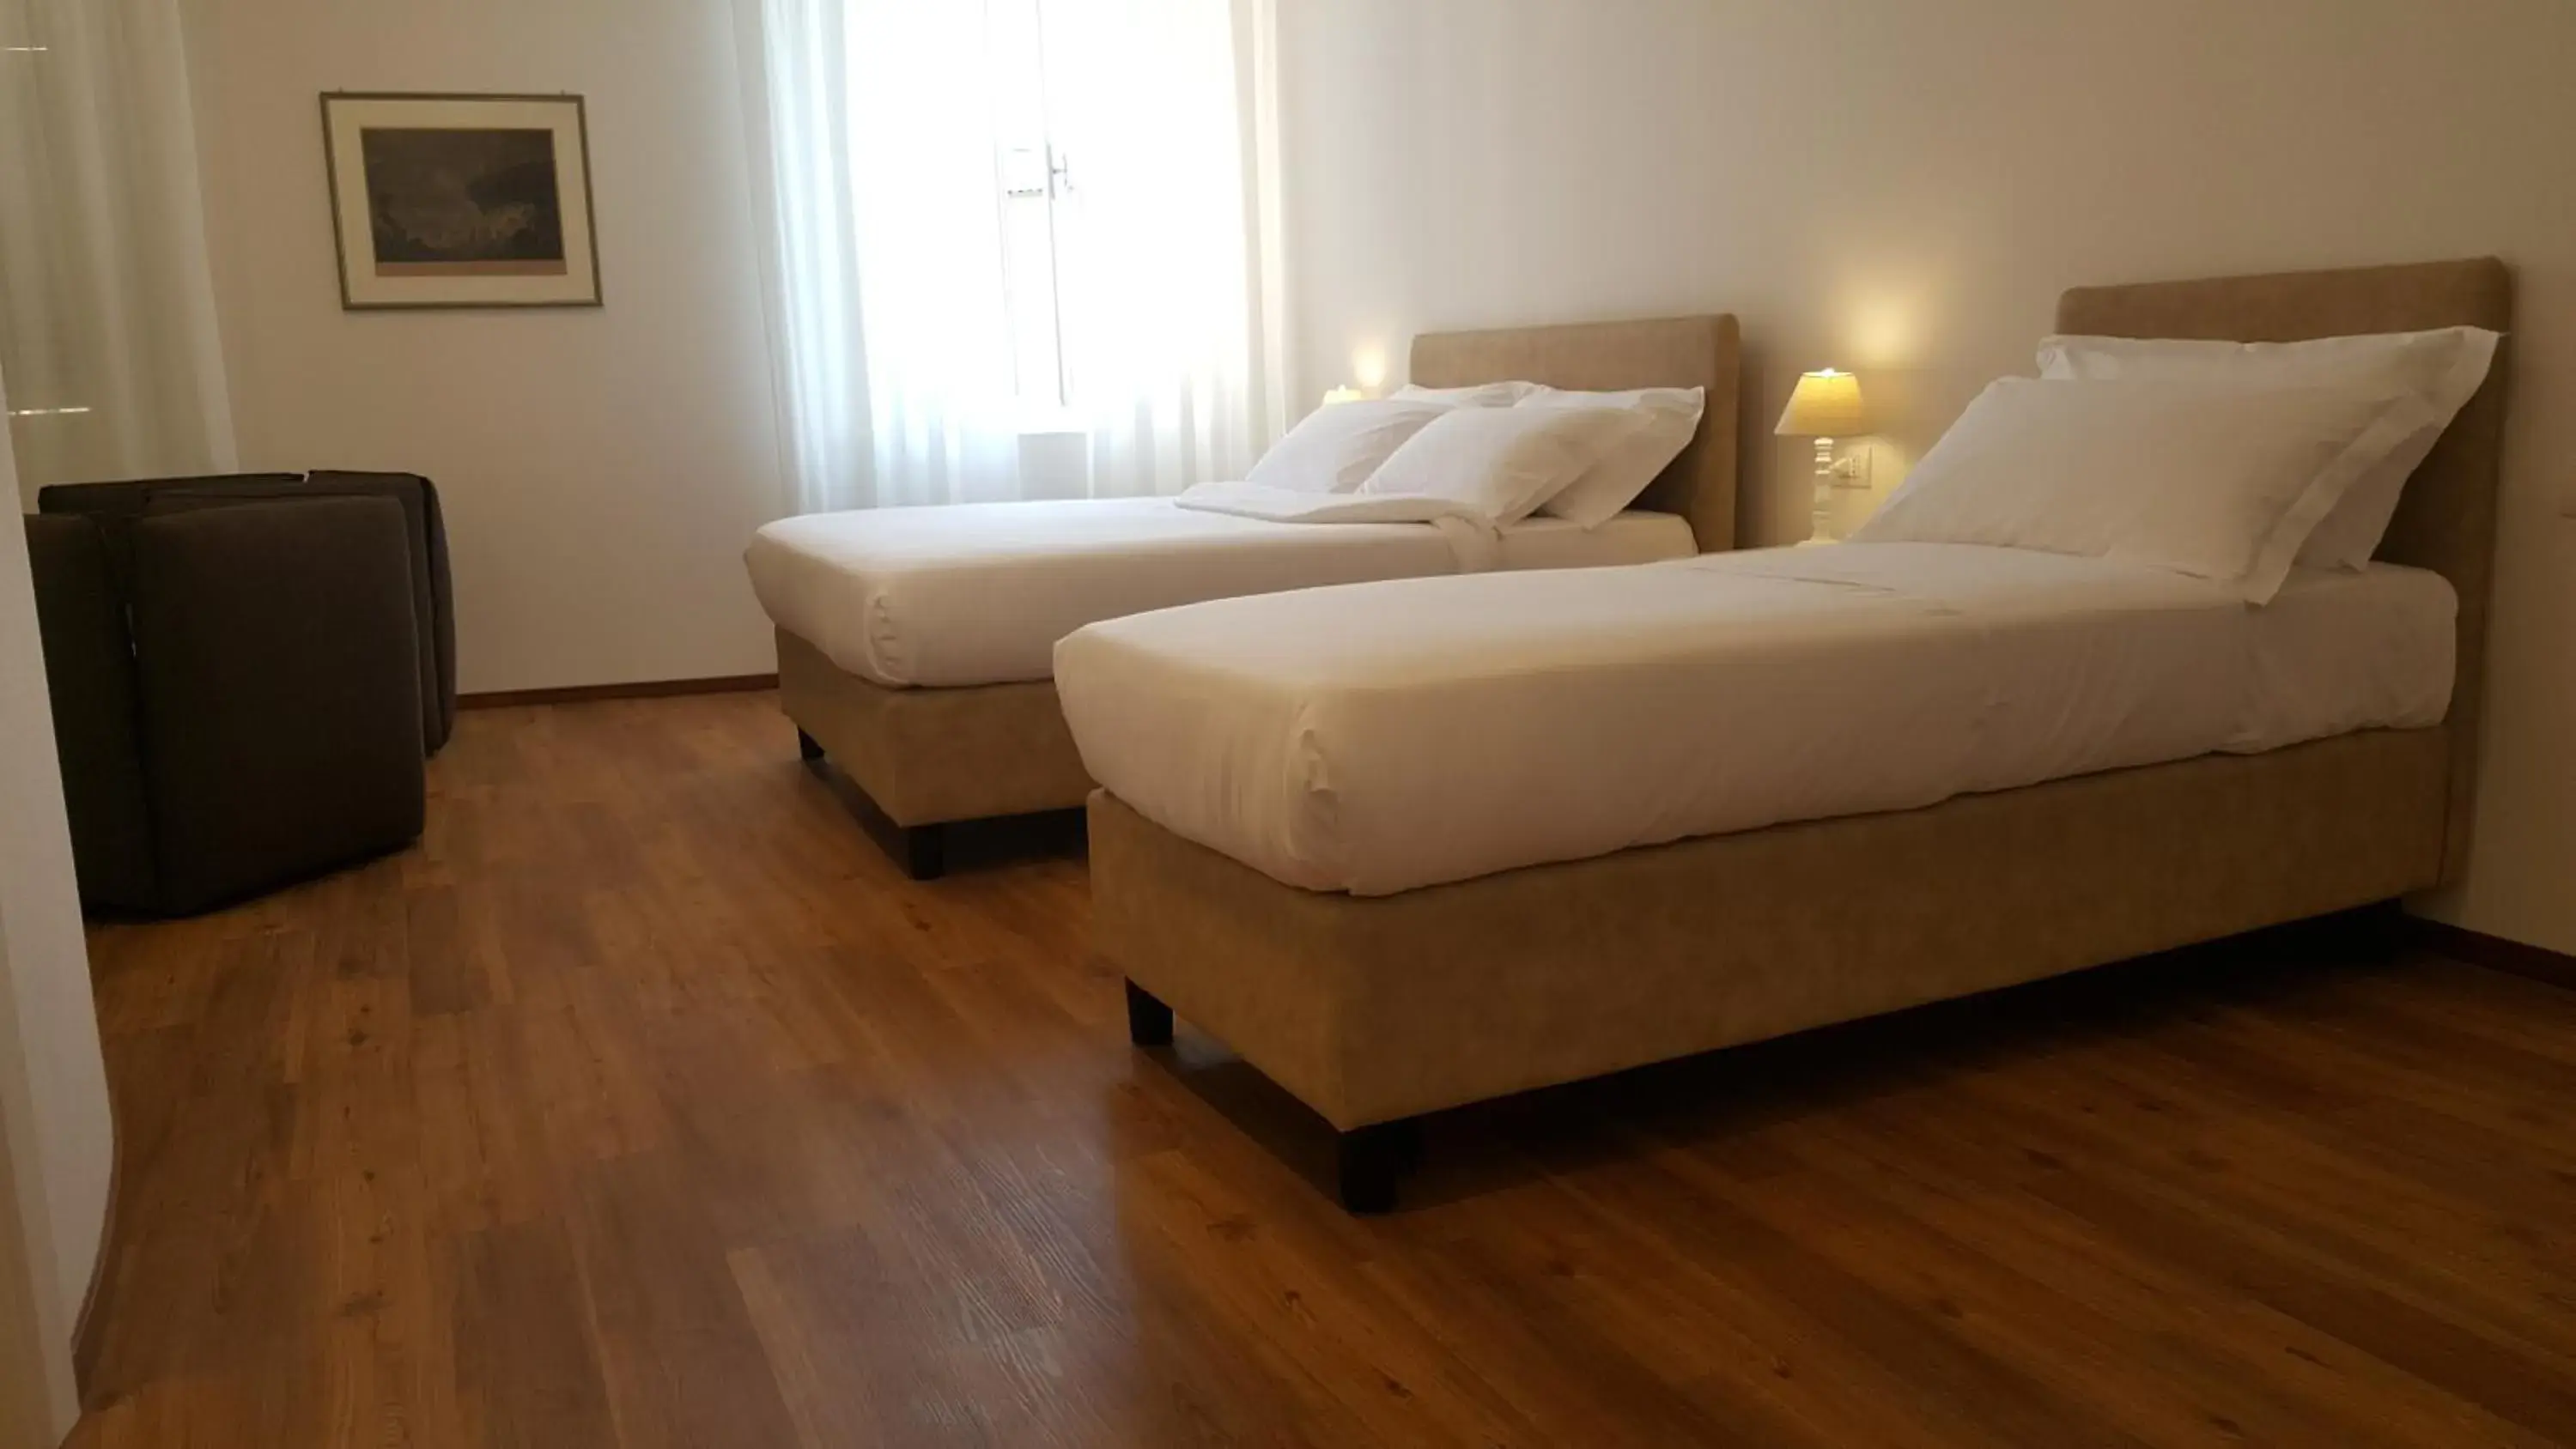 Bed, Room Photo in Albergo La Rocca